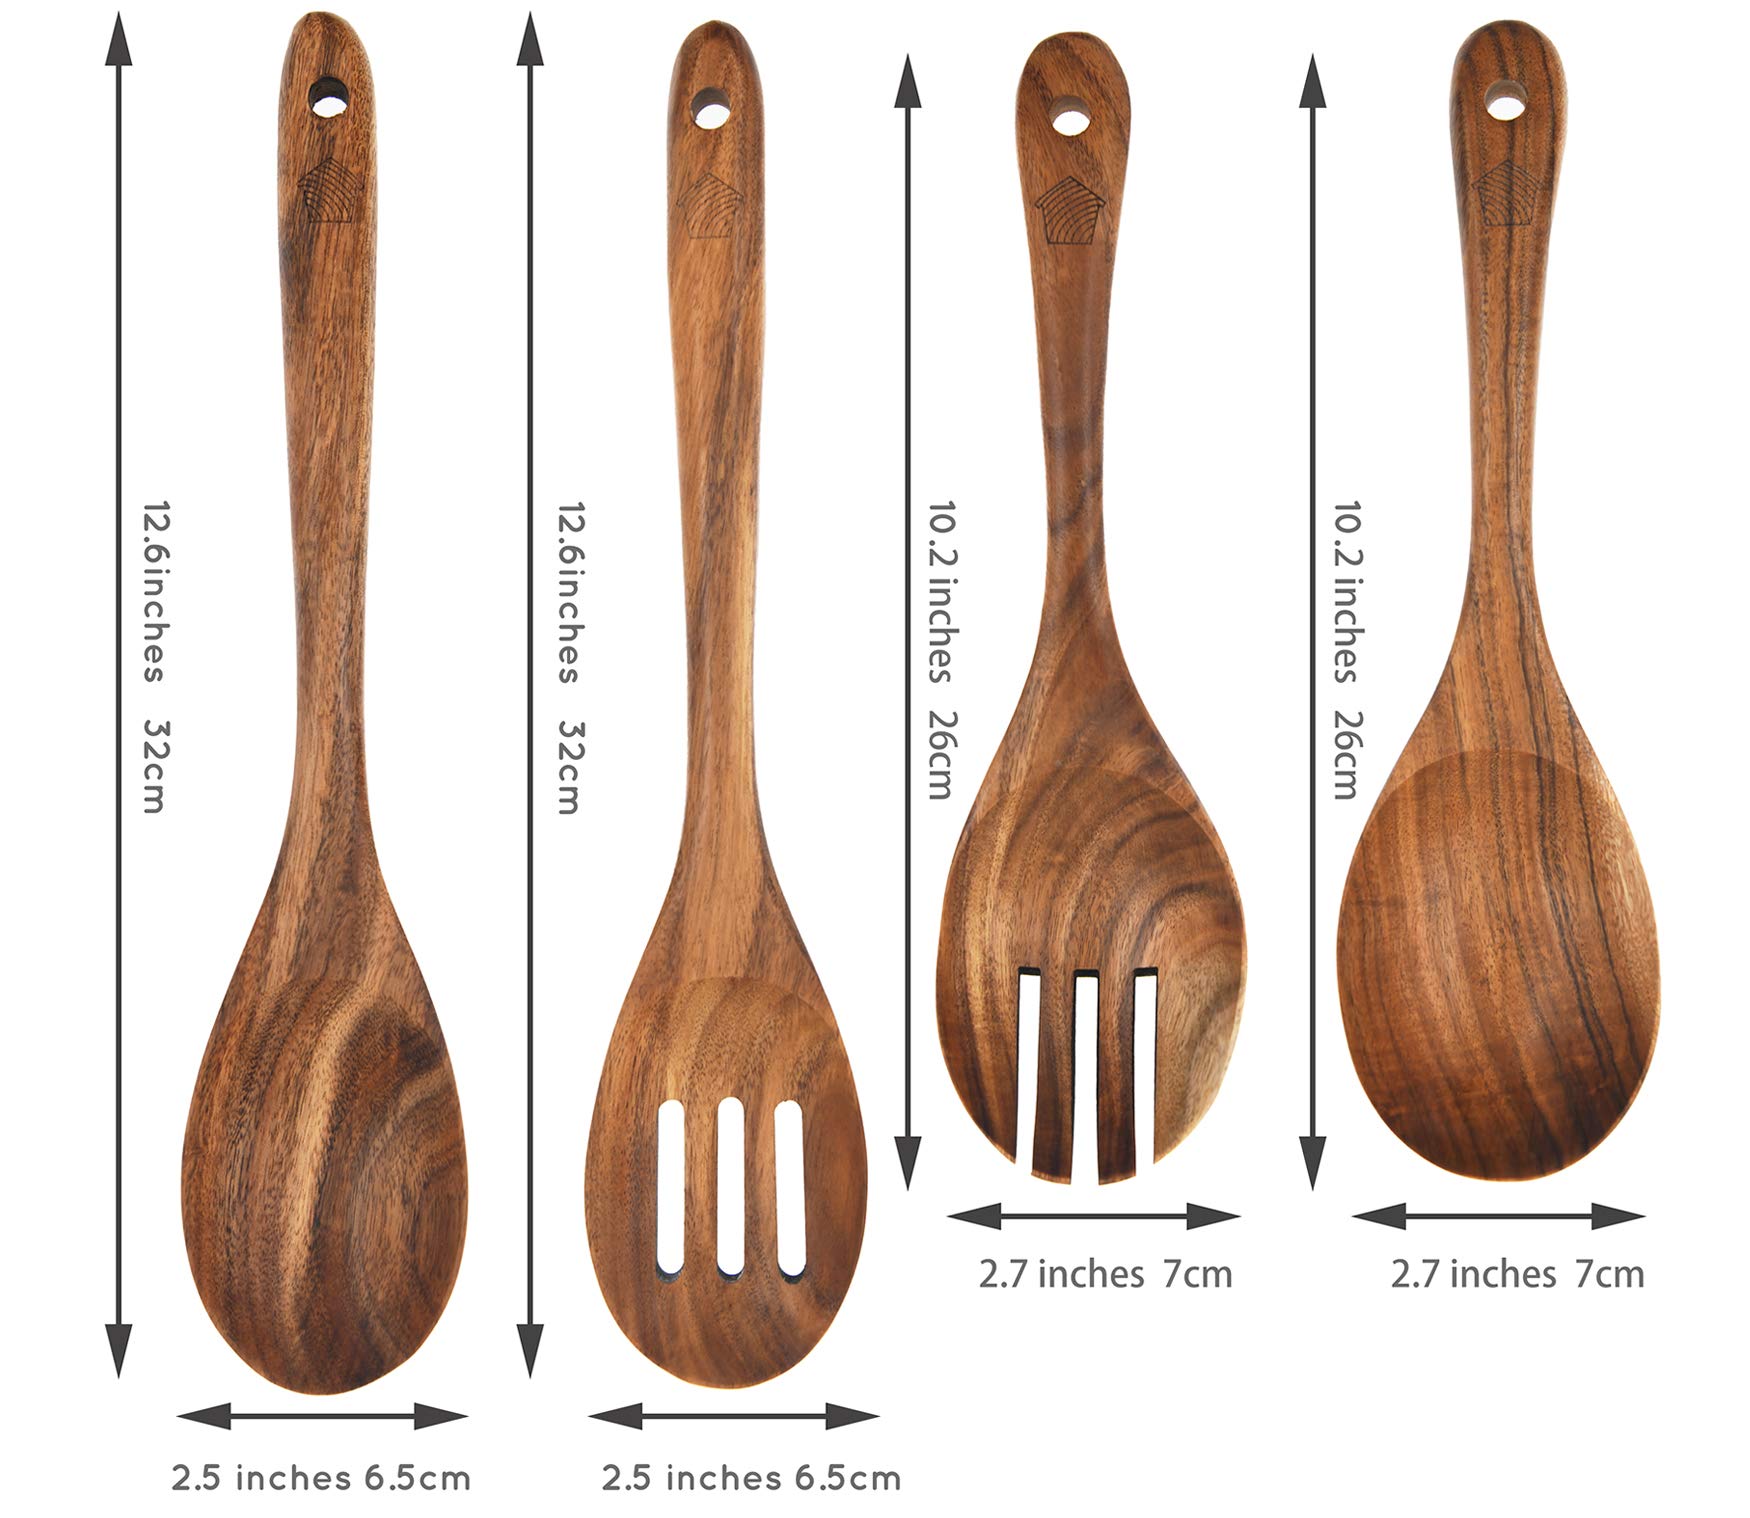 Wooden Ladle Spoon Set, 3 Size Teak Wood Kitchen Serving Spoon with Back  Hooks for Pot & Bowl, Non-Stick Wooden Spoon Set for Cooking, Serving and